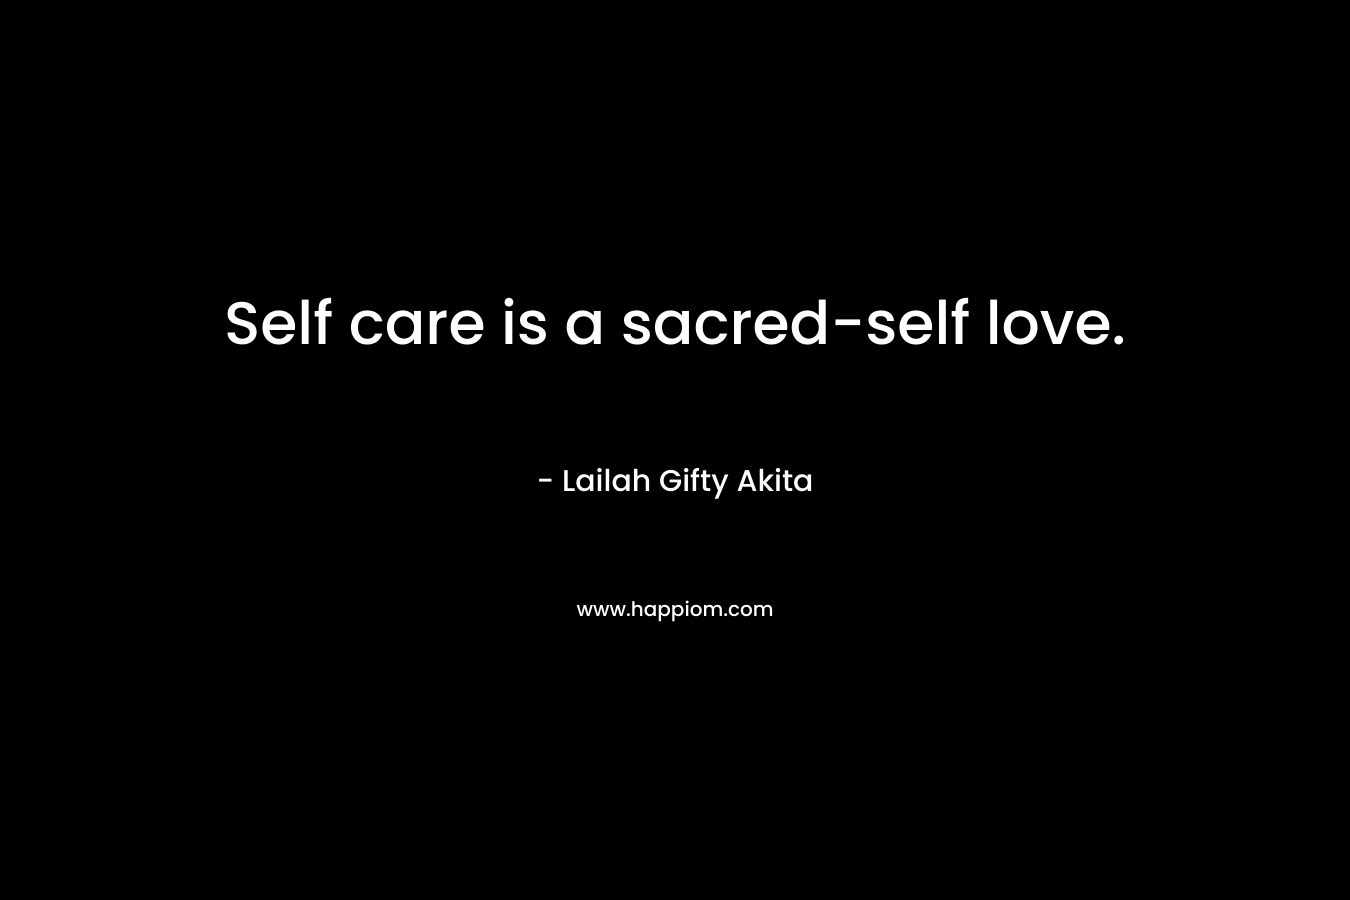 Self care is a sacred-self love.